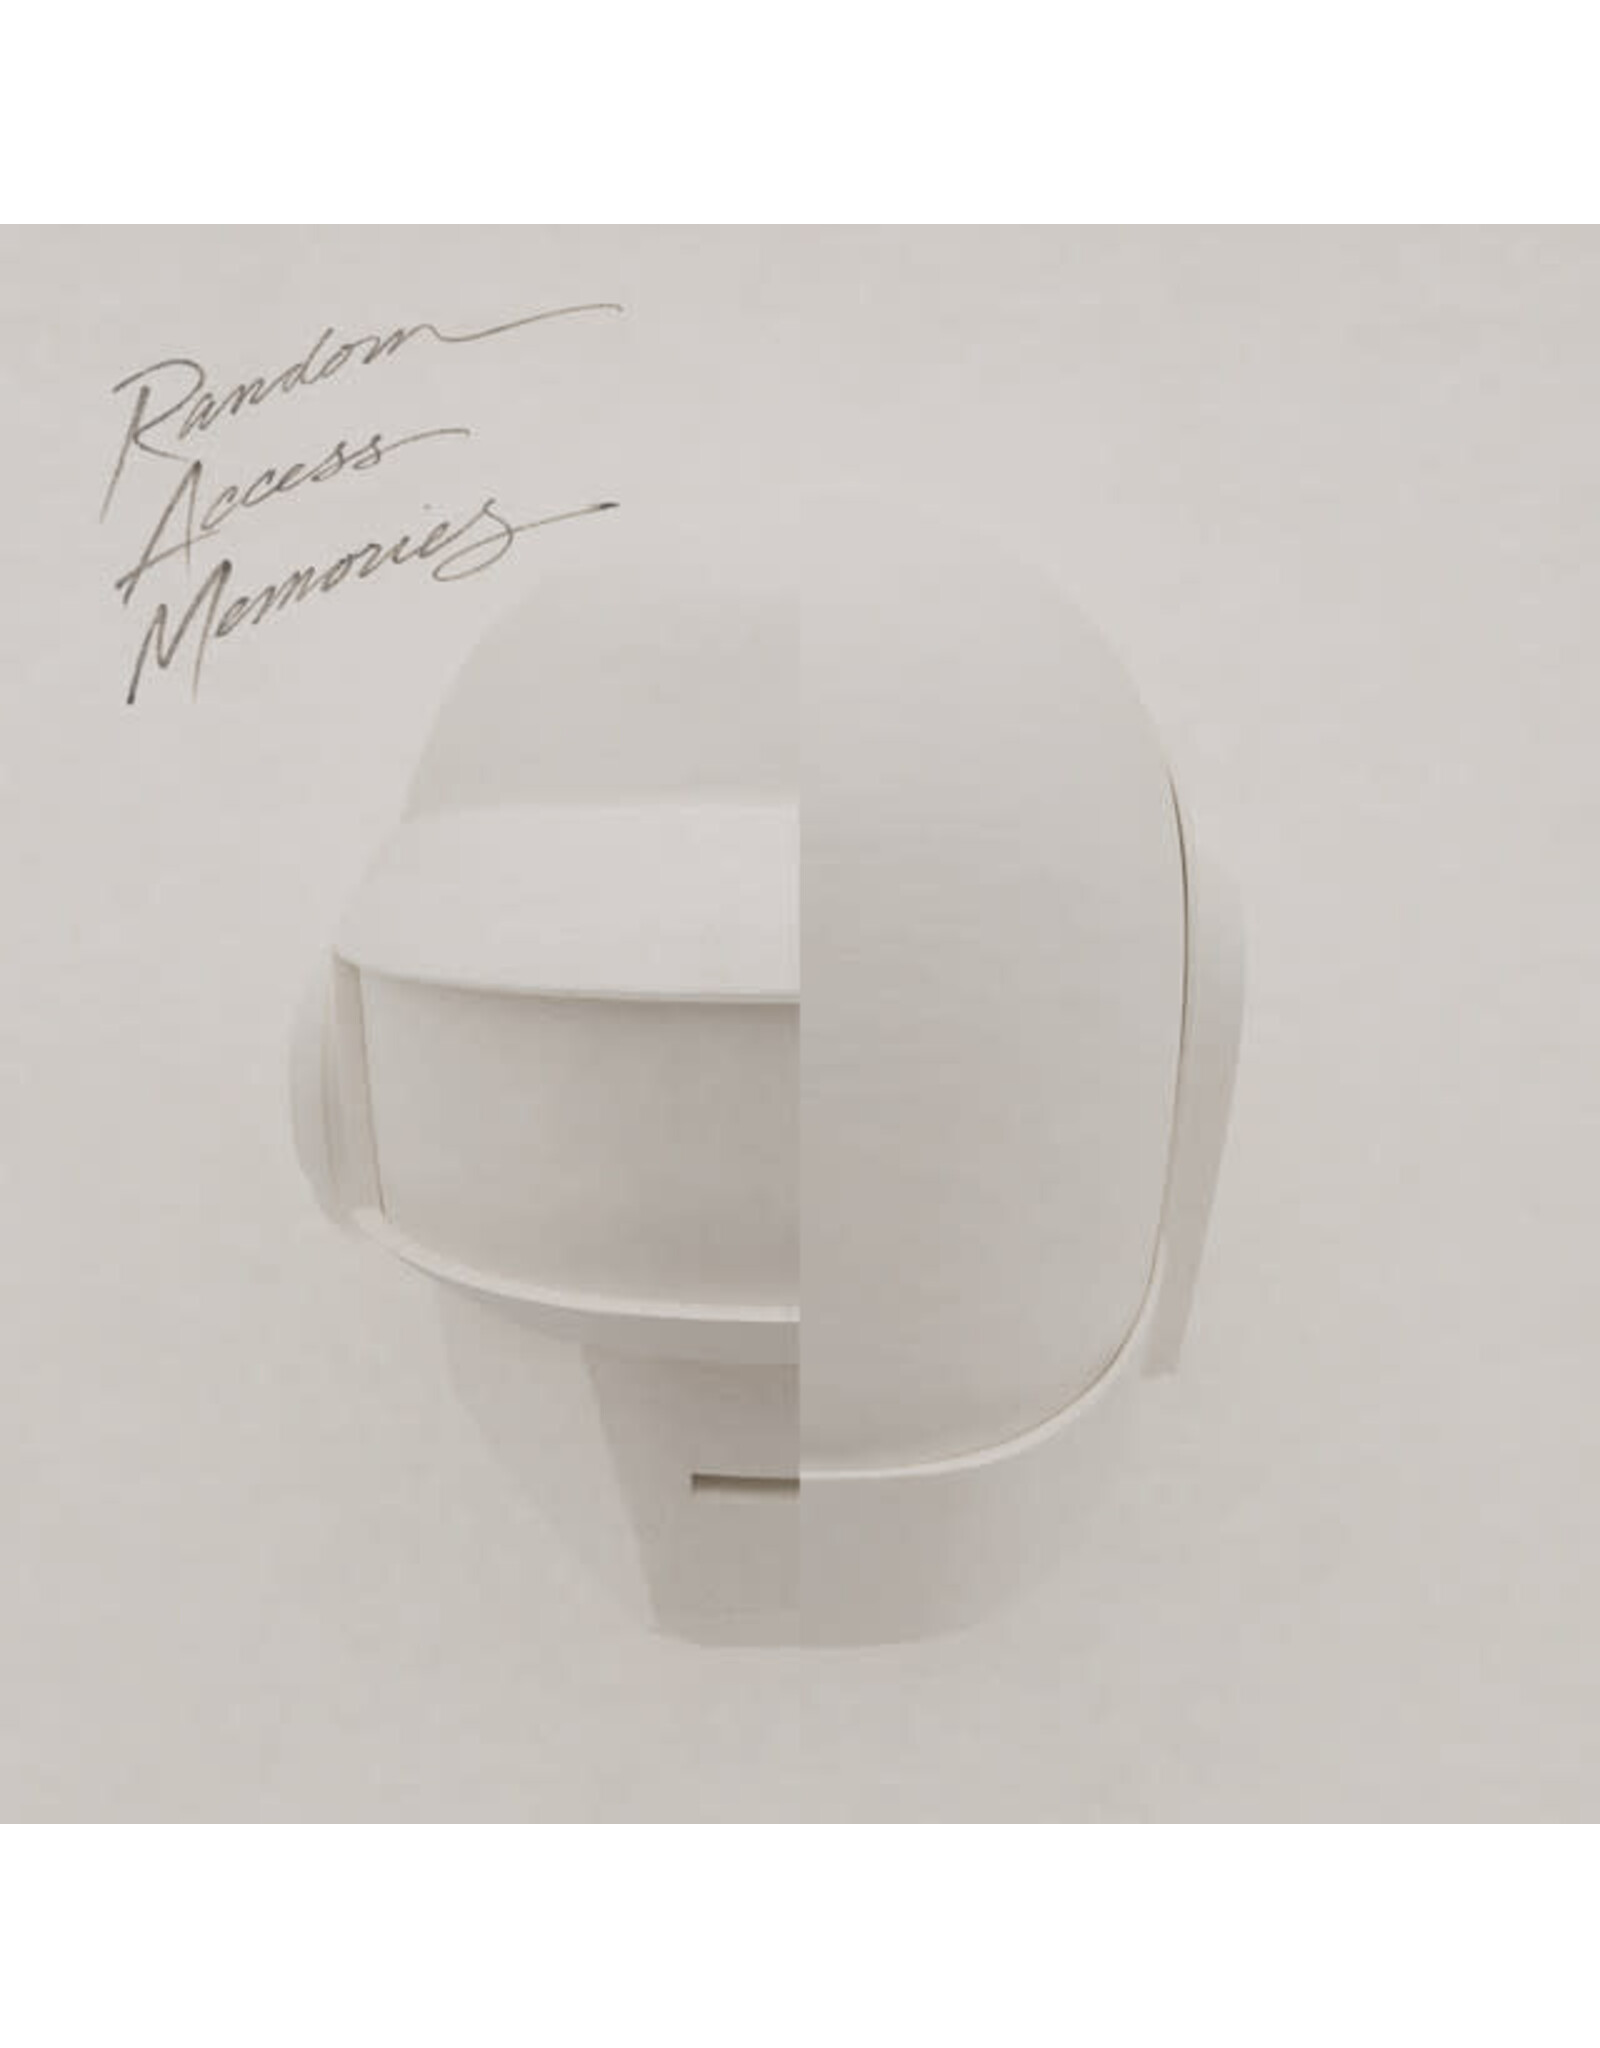 Columbia Daft Punk: Random Access Memories (Drumless) LP